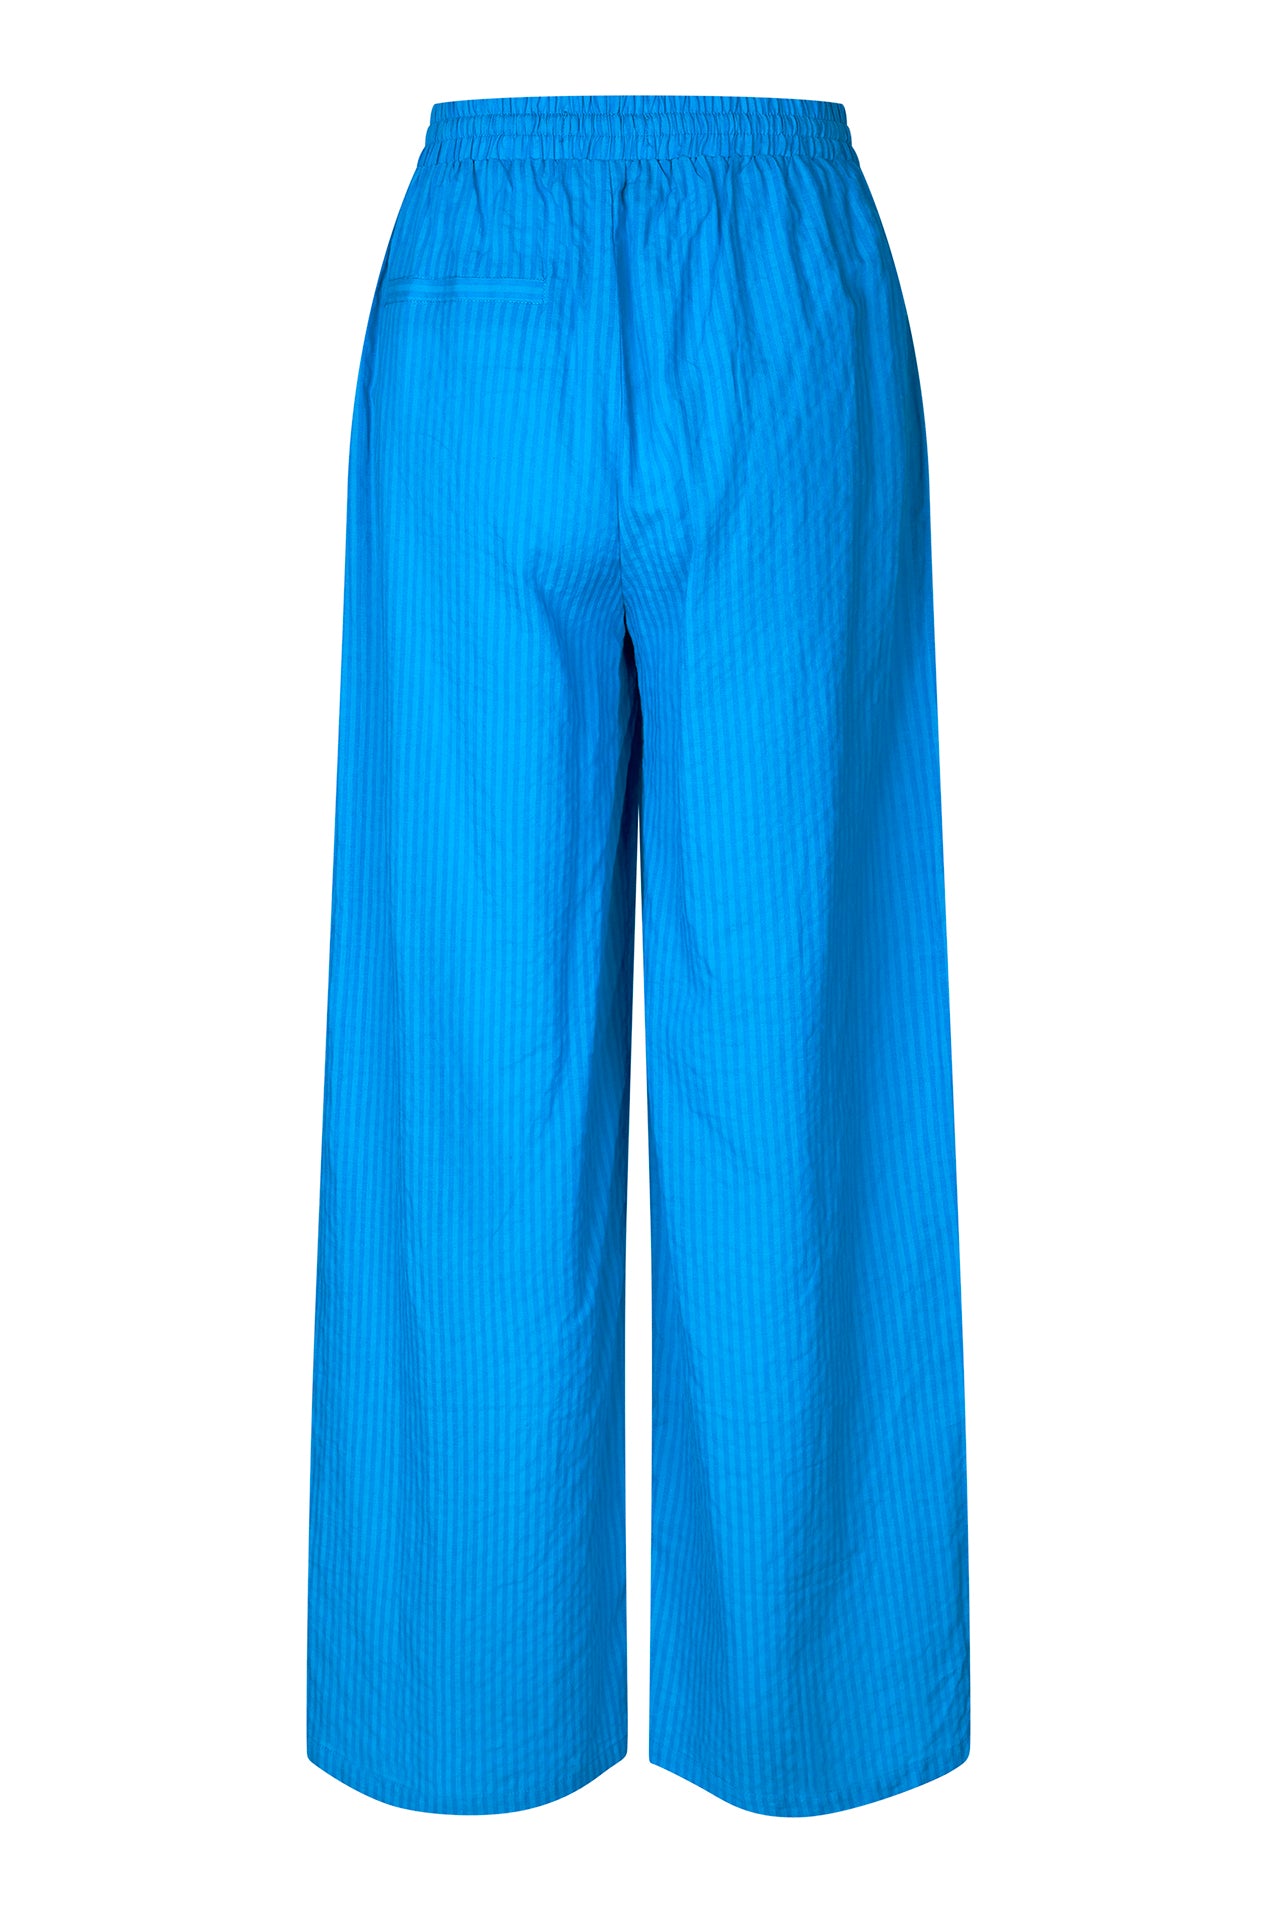 Lollys Laundry RitaLL Pants Pants 20 Blue